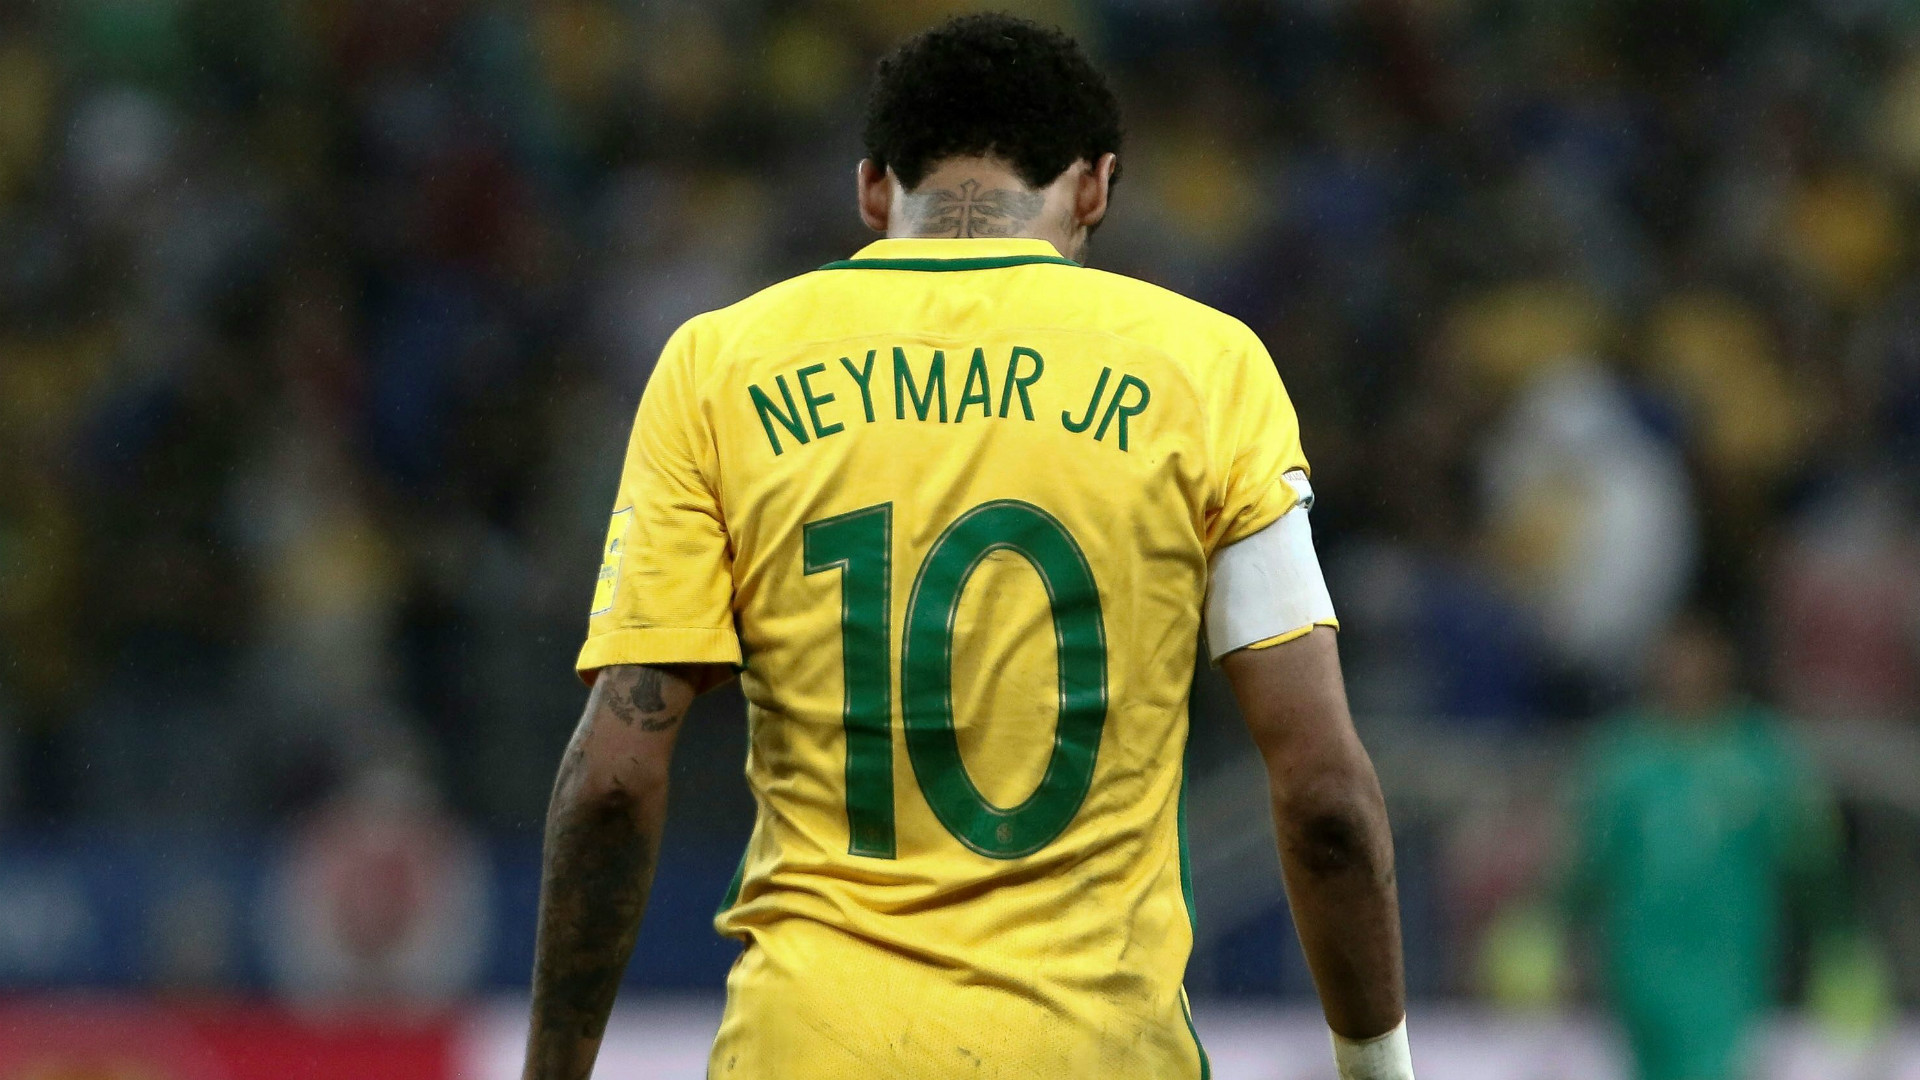 fond d'écran foto neymar jr,joueur,joueur de football,joueur de football,jaune,équipement sportif